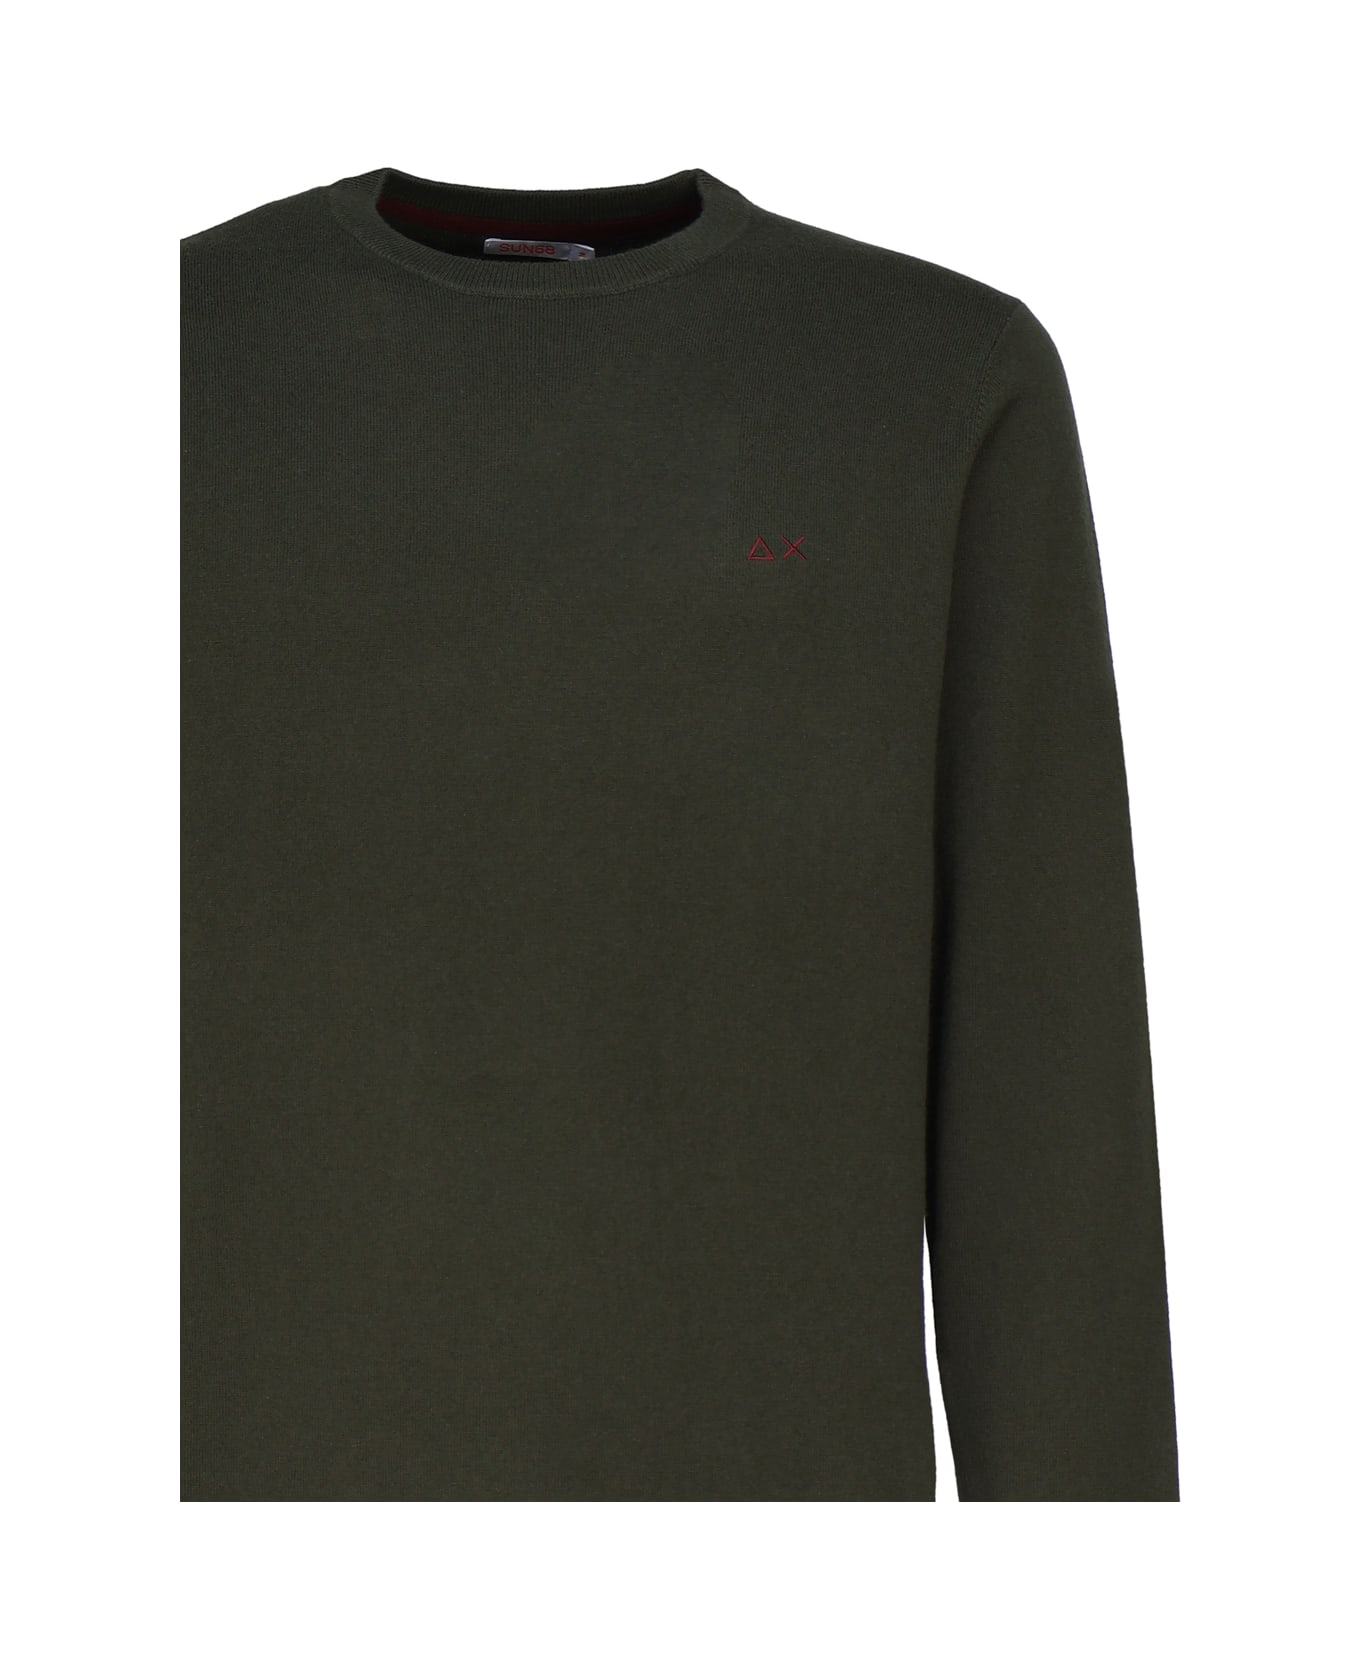 Sun 68 Sweater With Logo - Verde militare ニットウェア